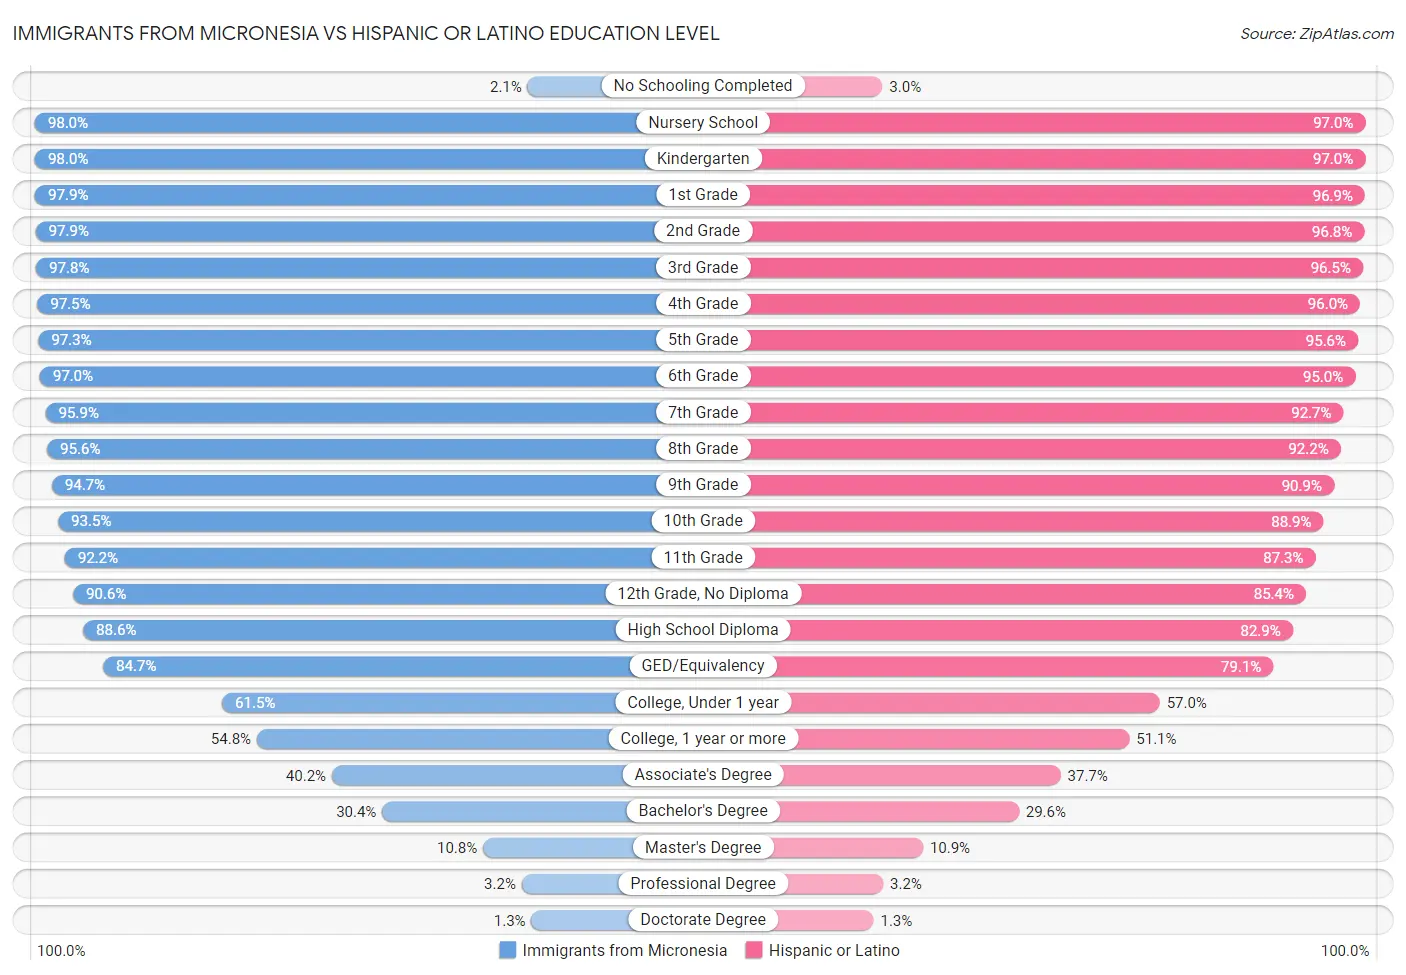 Immigrants from Micronesia vs Hispanic or Latino Education Level